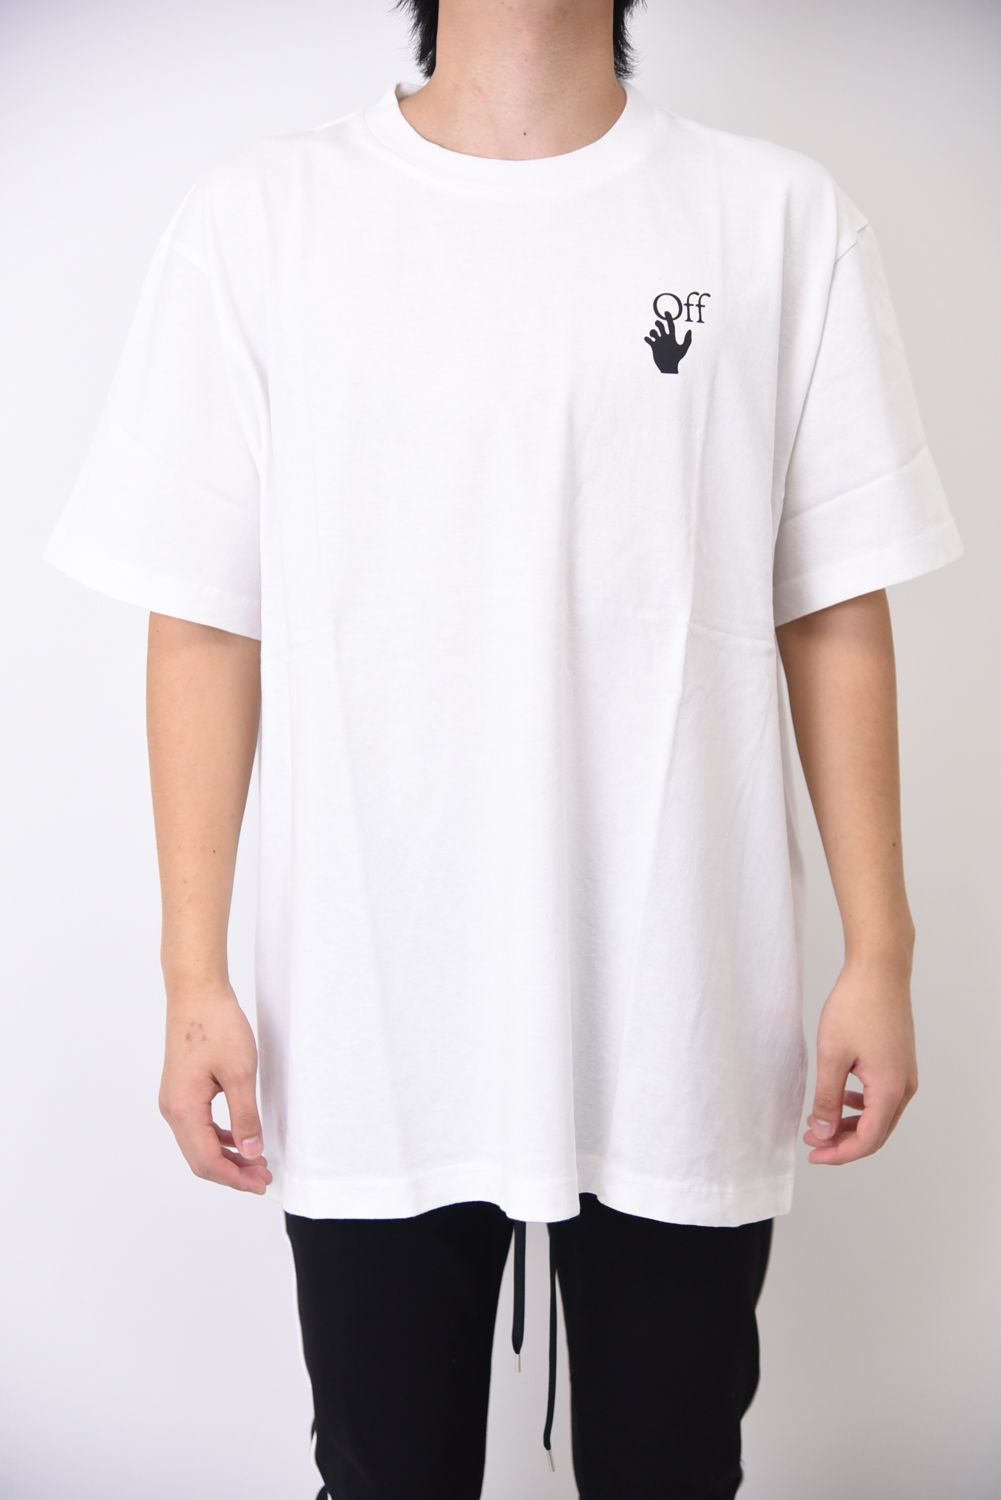 PASCAL ARROW S/S T-SHIRT / アローロゴ オリジナルプリント クルーネックTシャツ ホワイト - XS